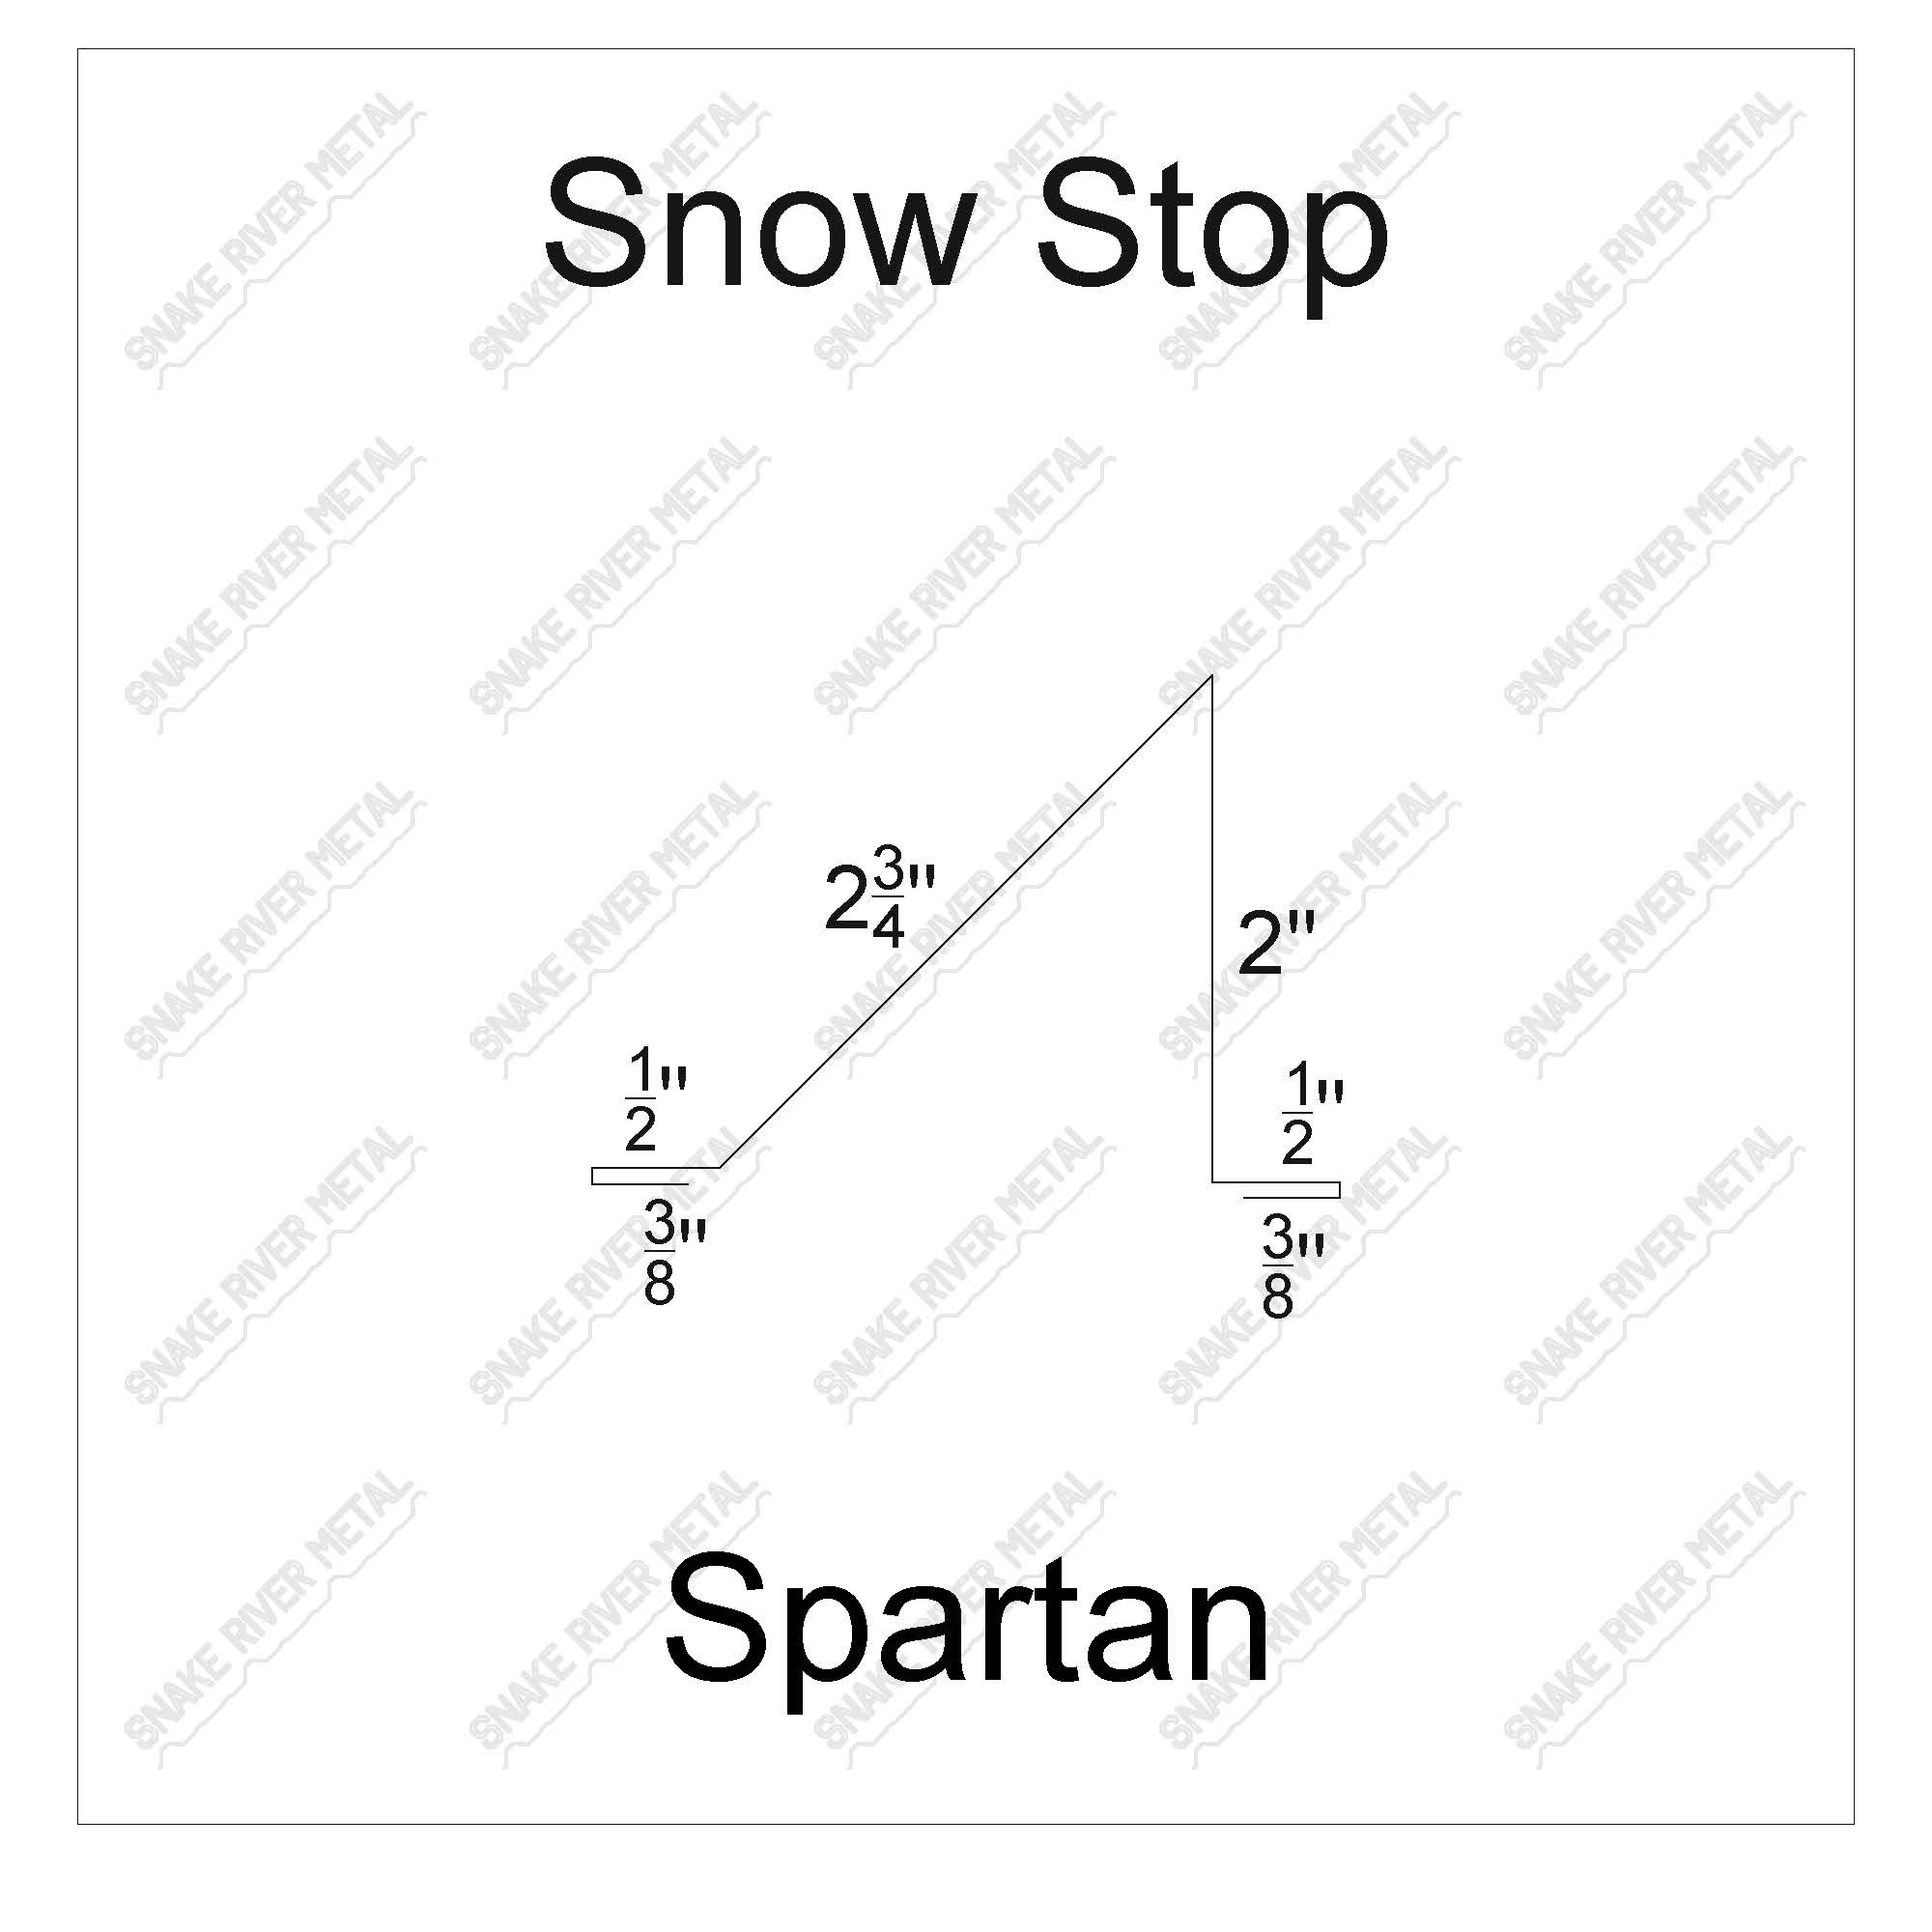 Snow Stop - SpartanTrim